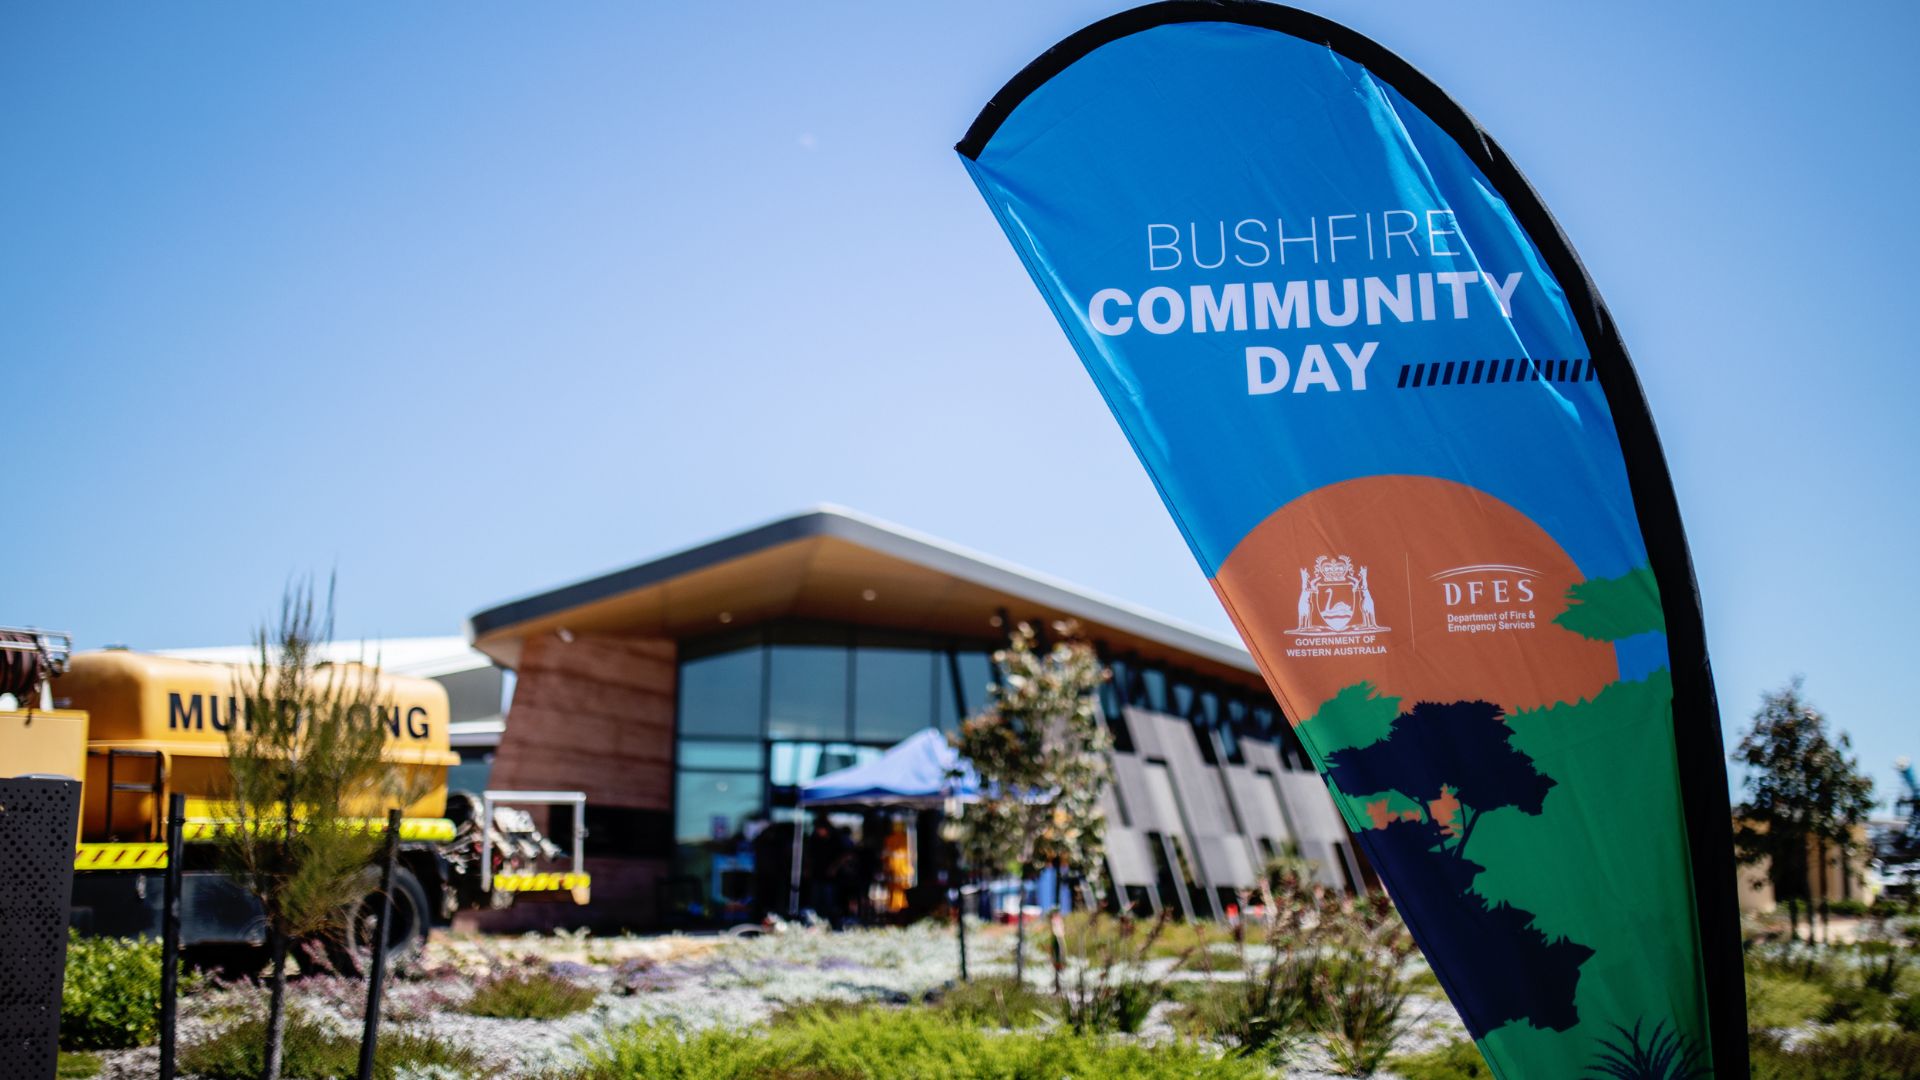 Bushfire Community Day